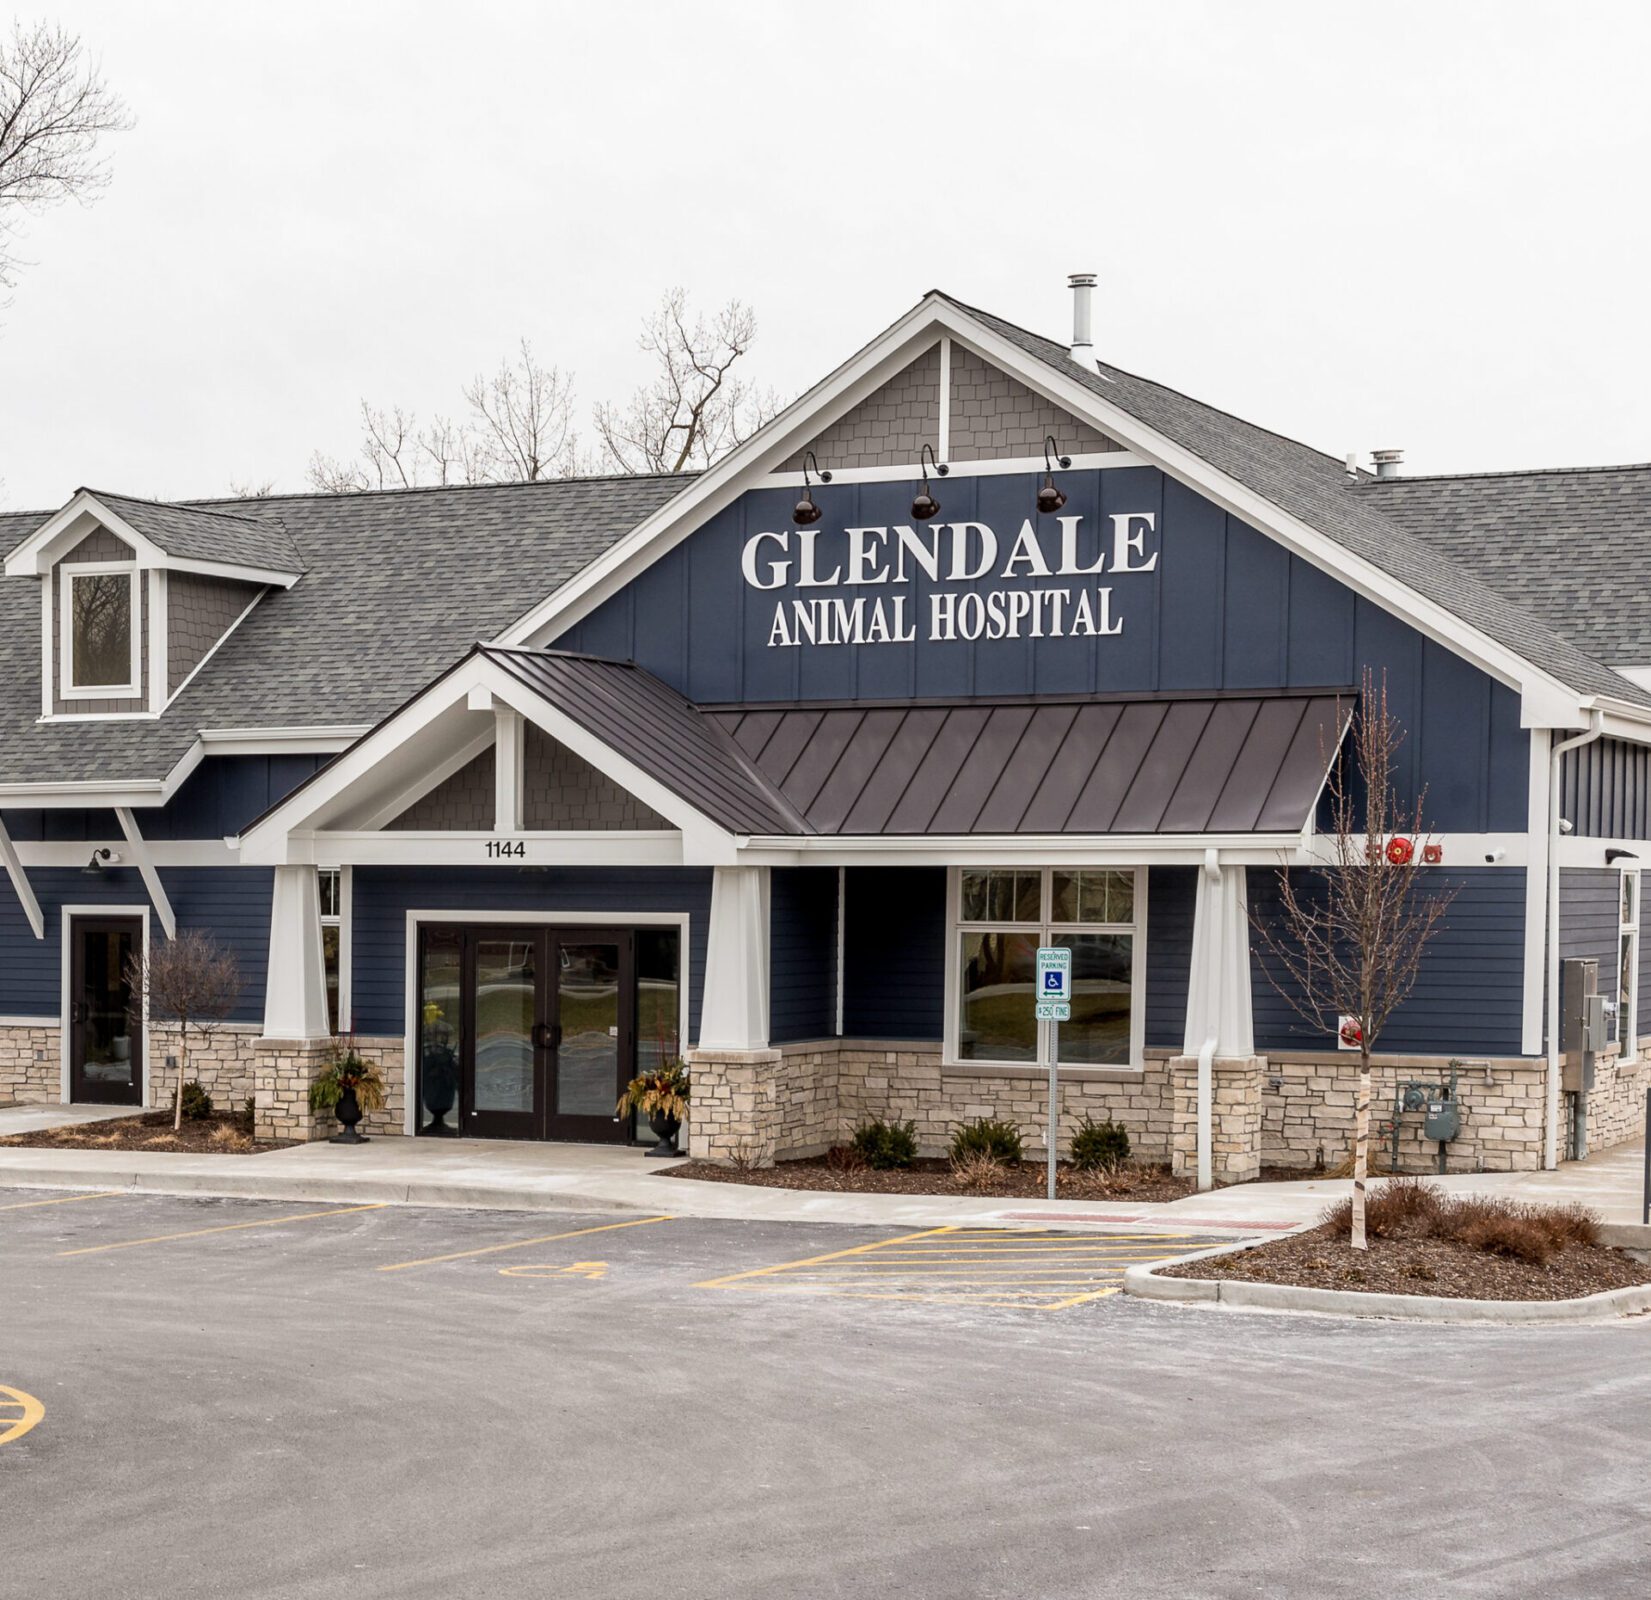 Glendale Animal Hospital exterior image.